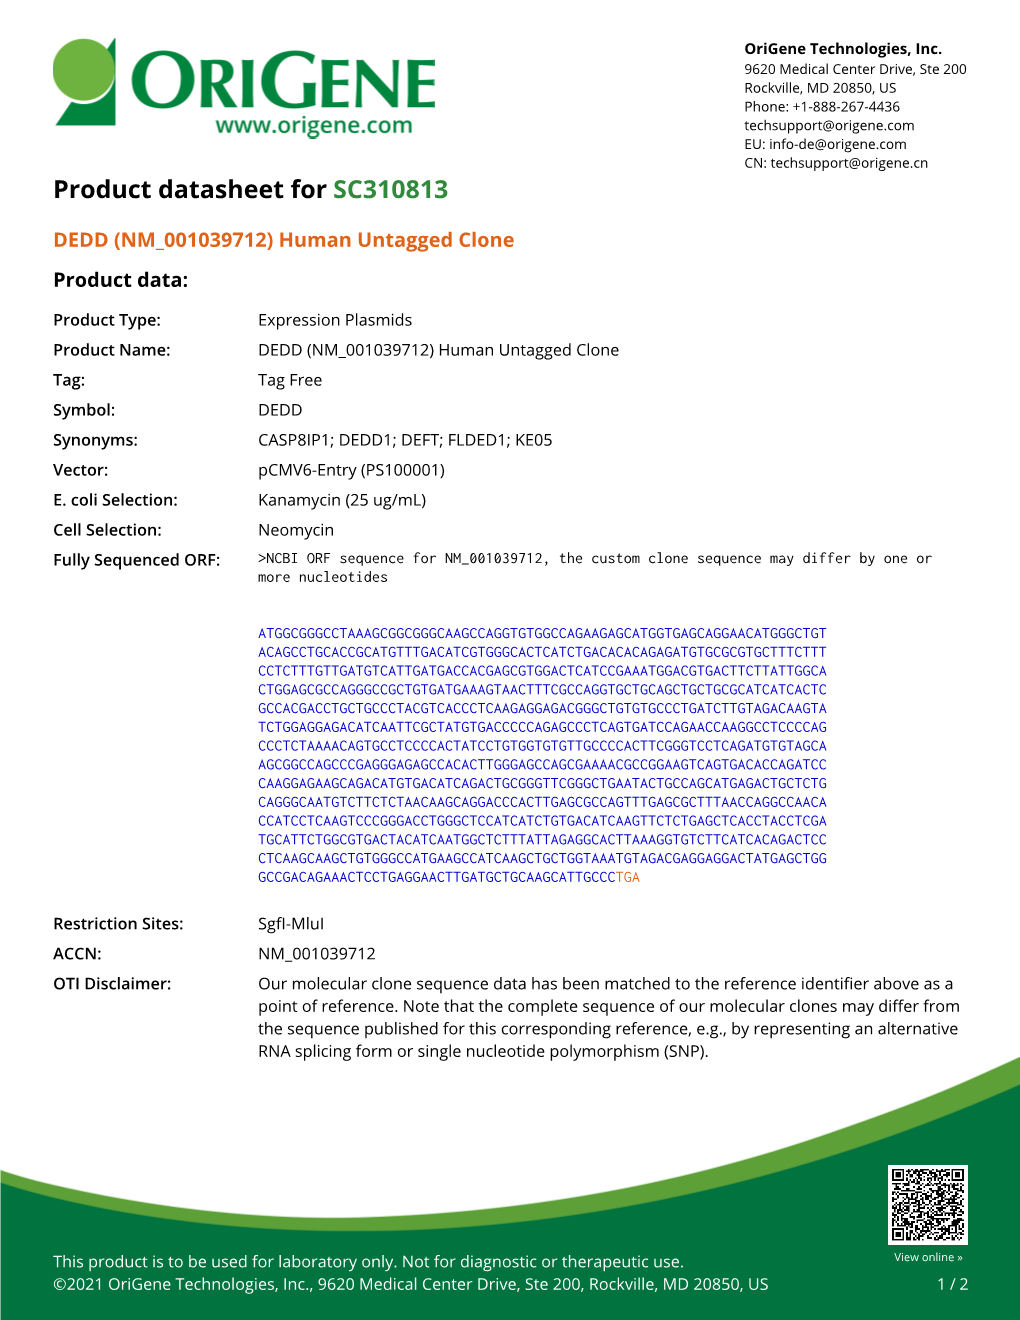 DEDD (NM 001039712) Human Untagged Clone Product Data